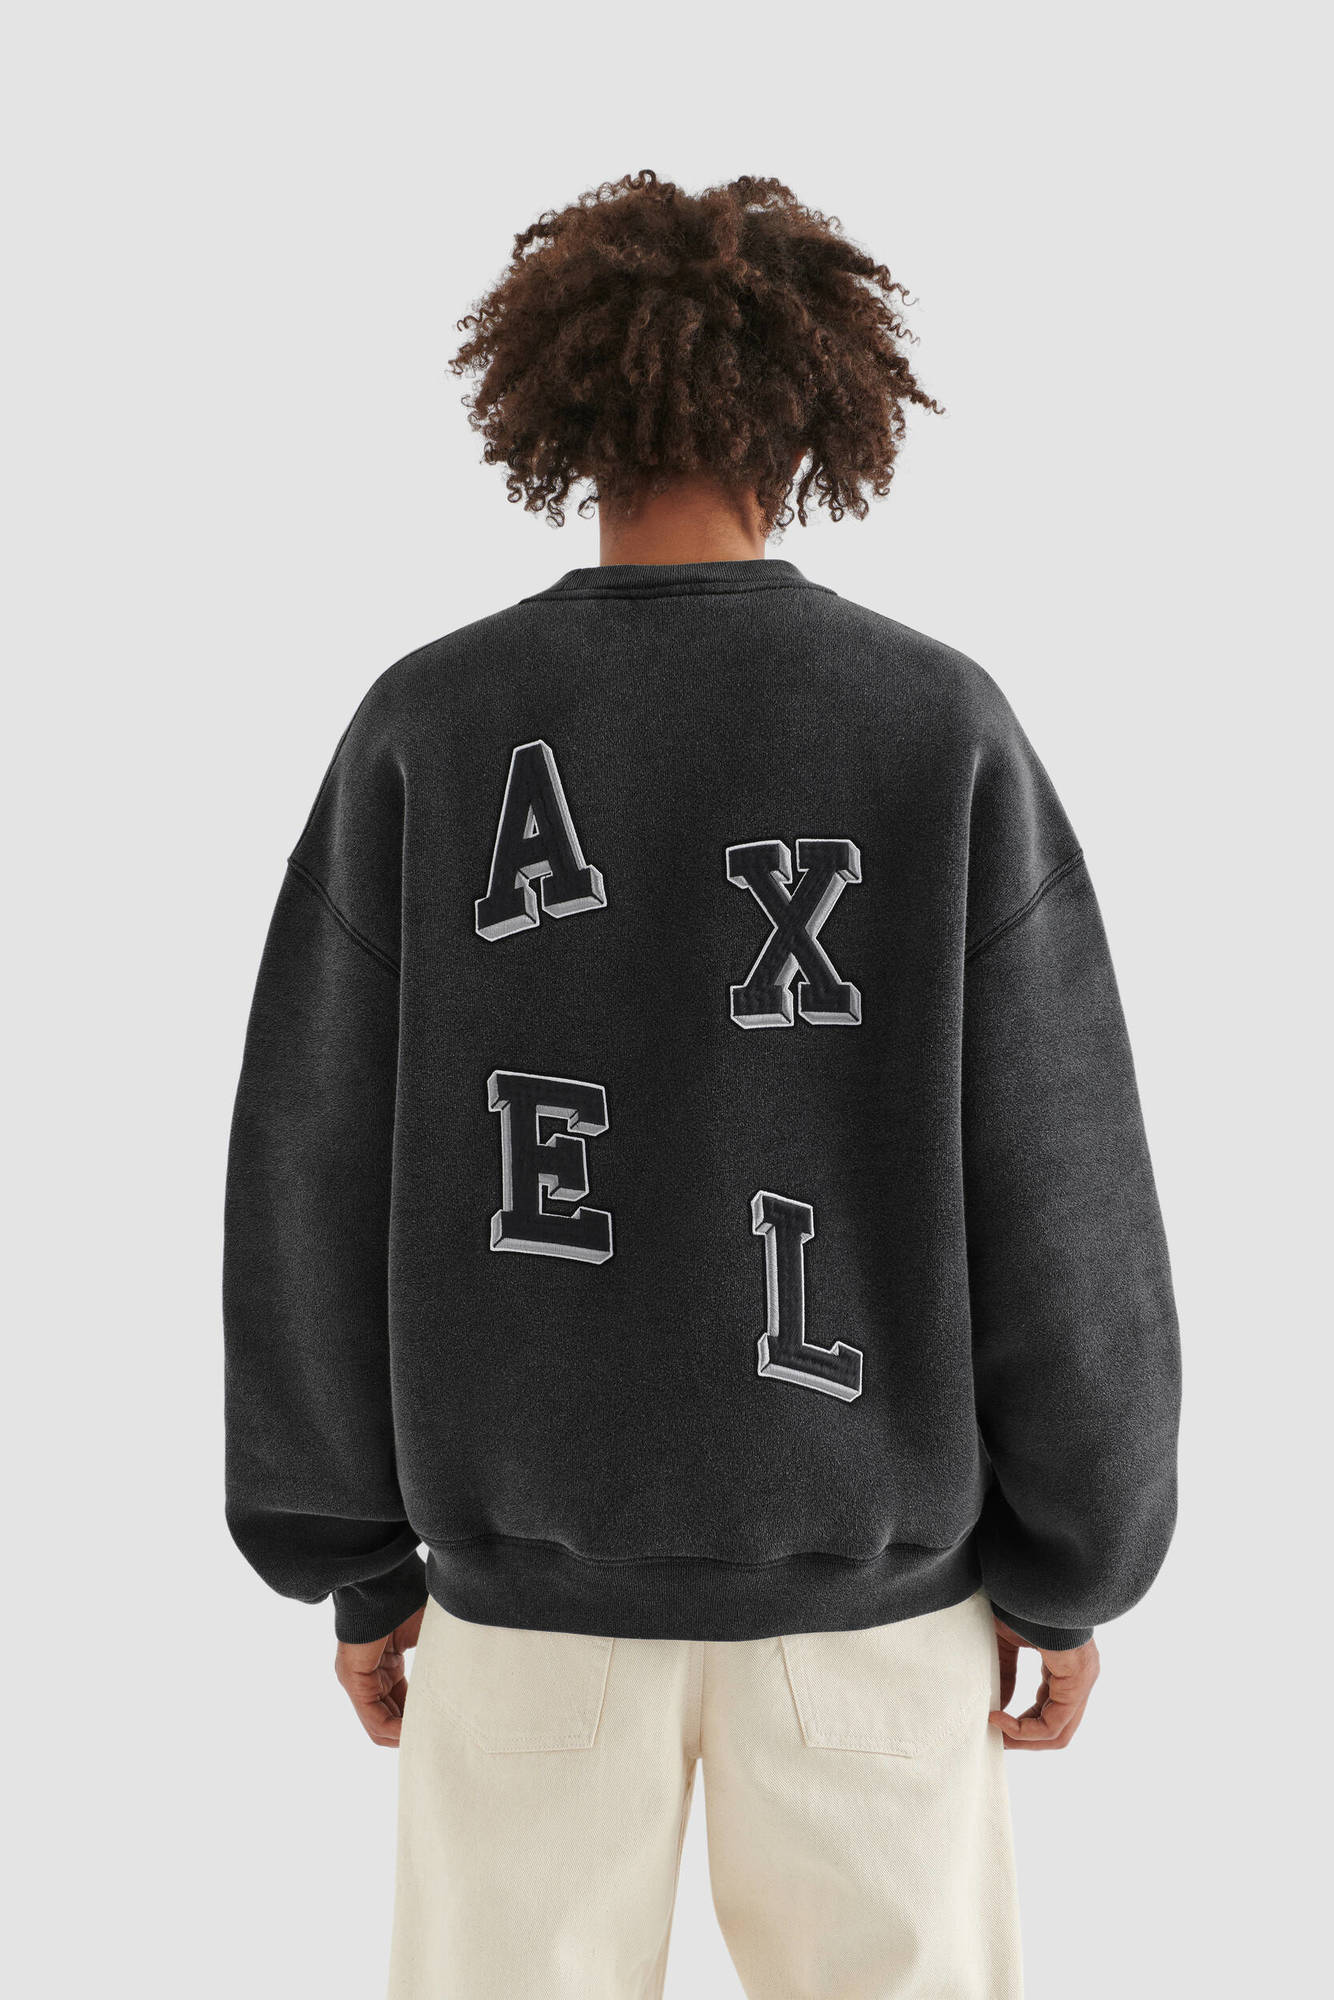 AXEL ARIGATO - Typo Sweatshirt